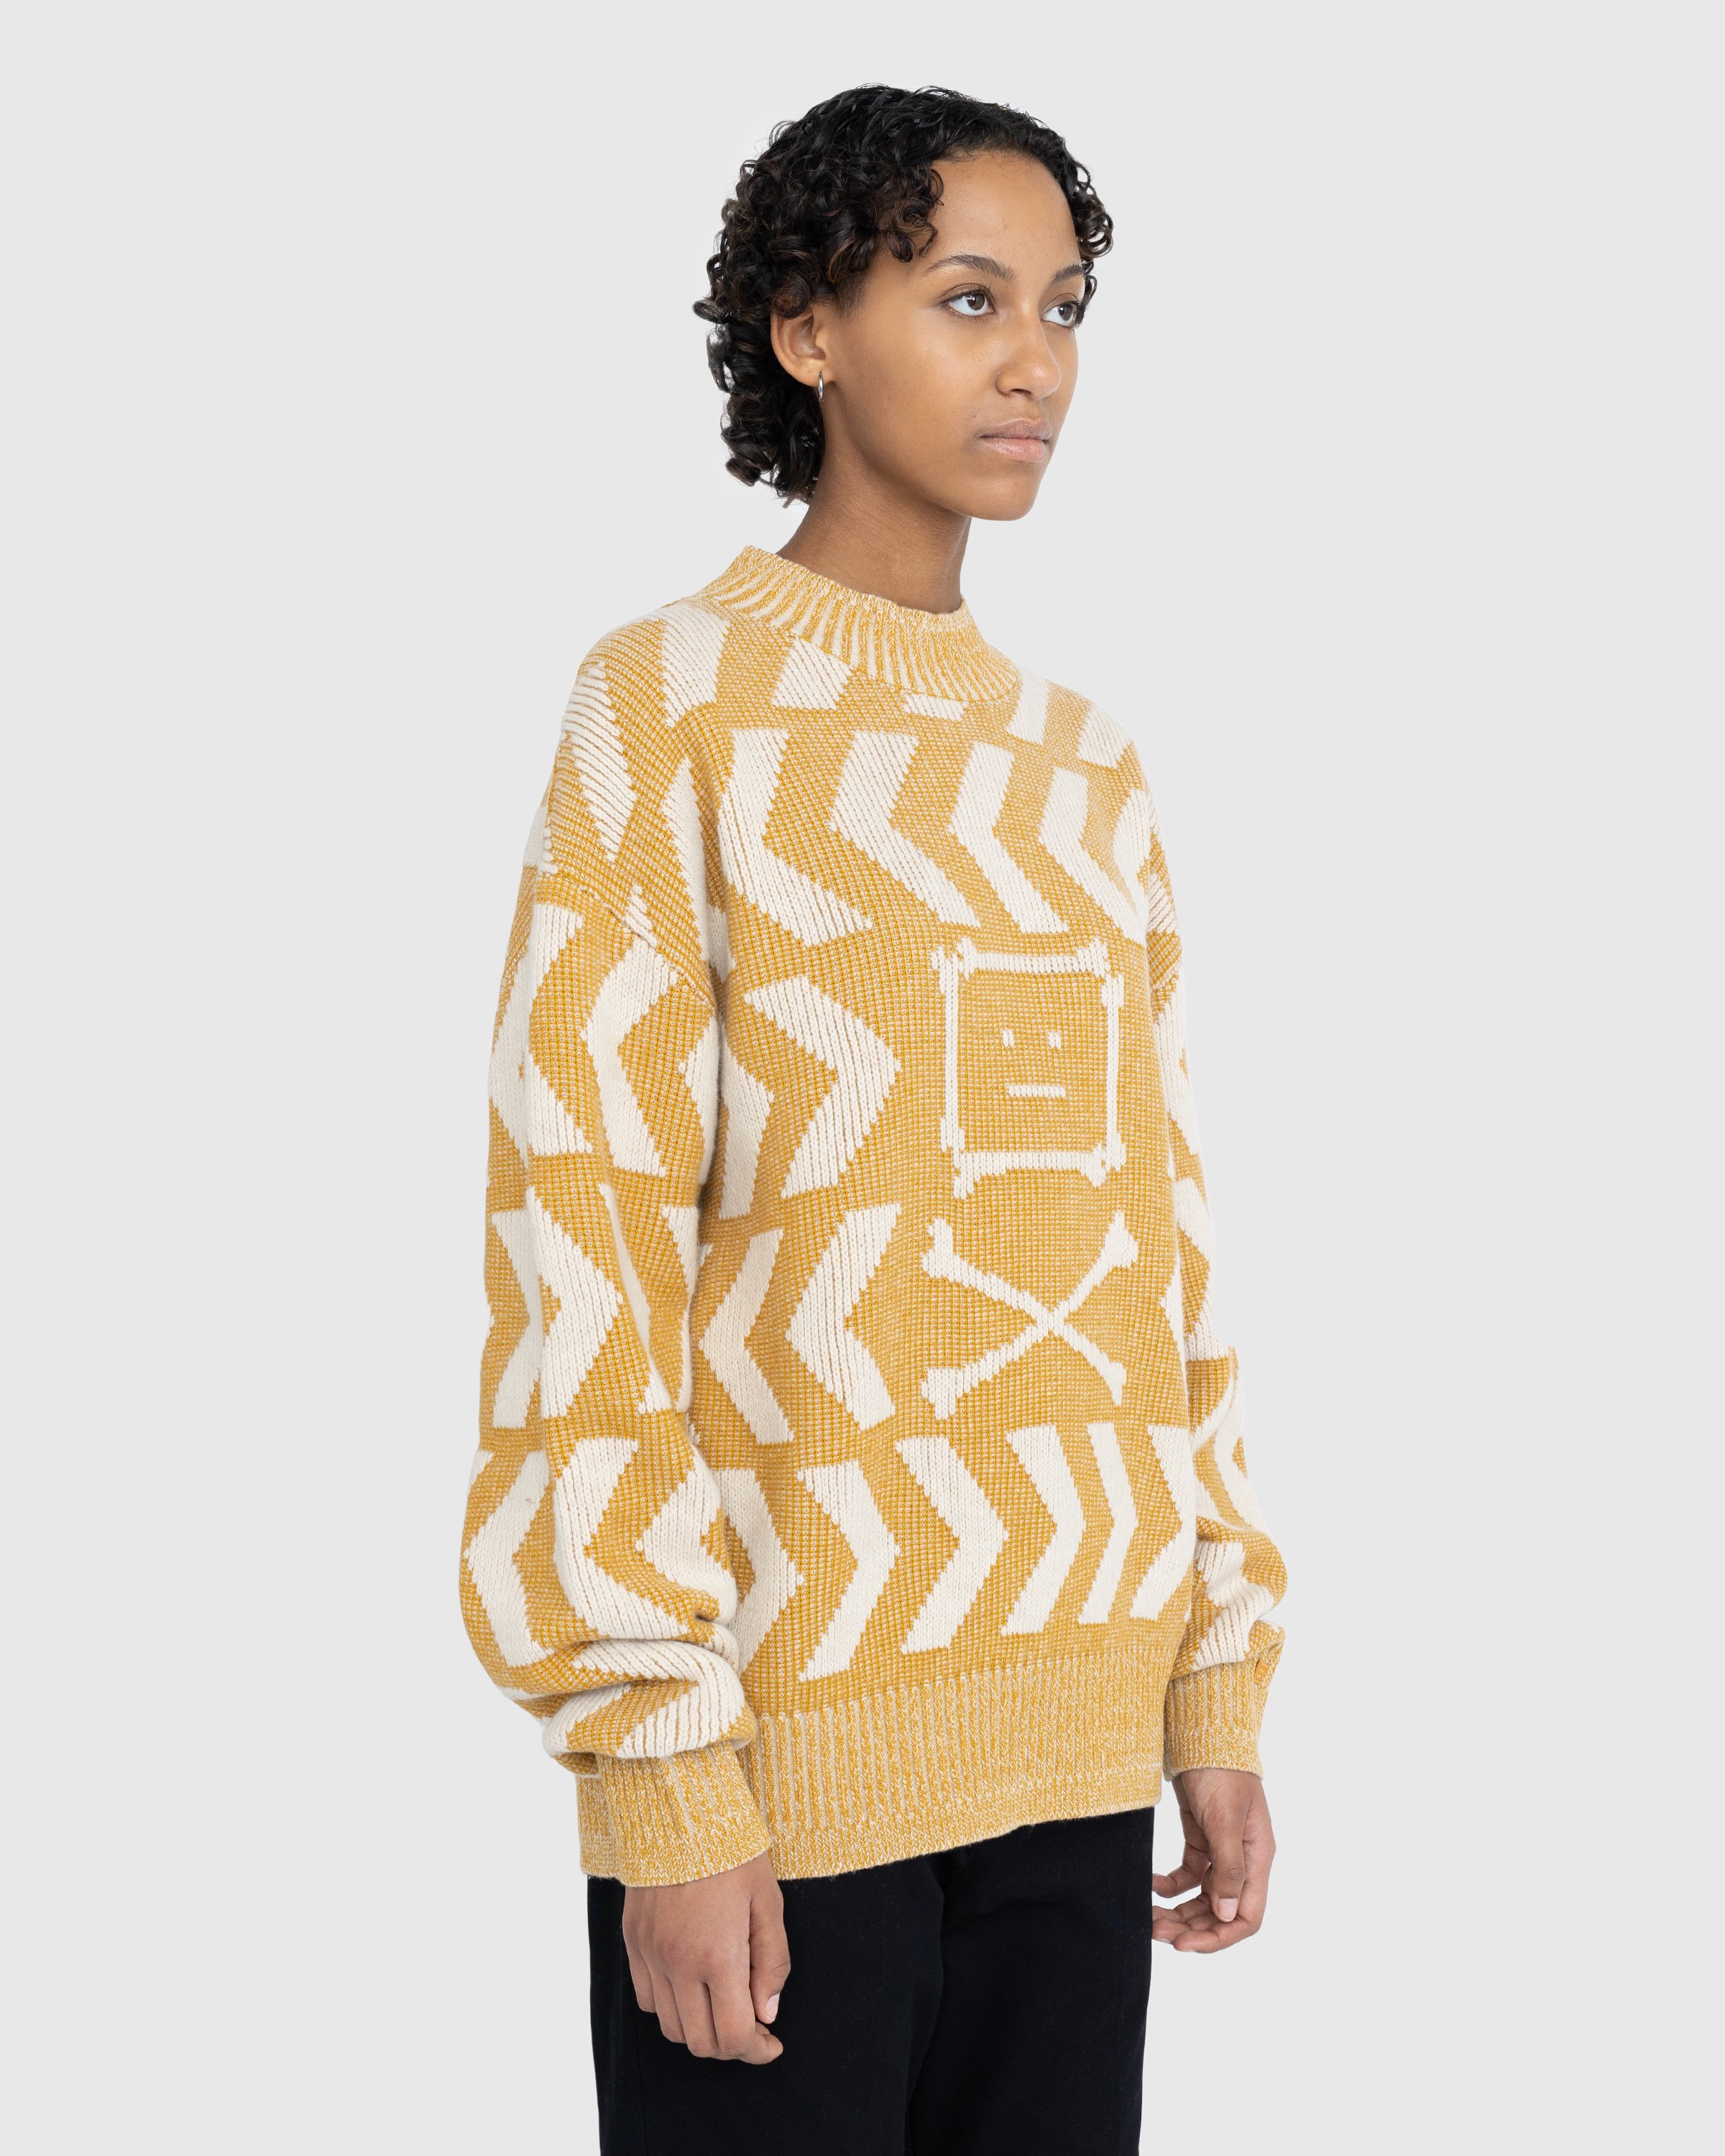 Acne Studios - Face Crossbones and Arrow Crewneck Sweater Yellow - Clothing - Yellow - Image 3